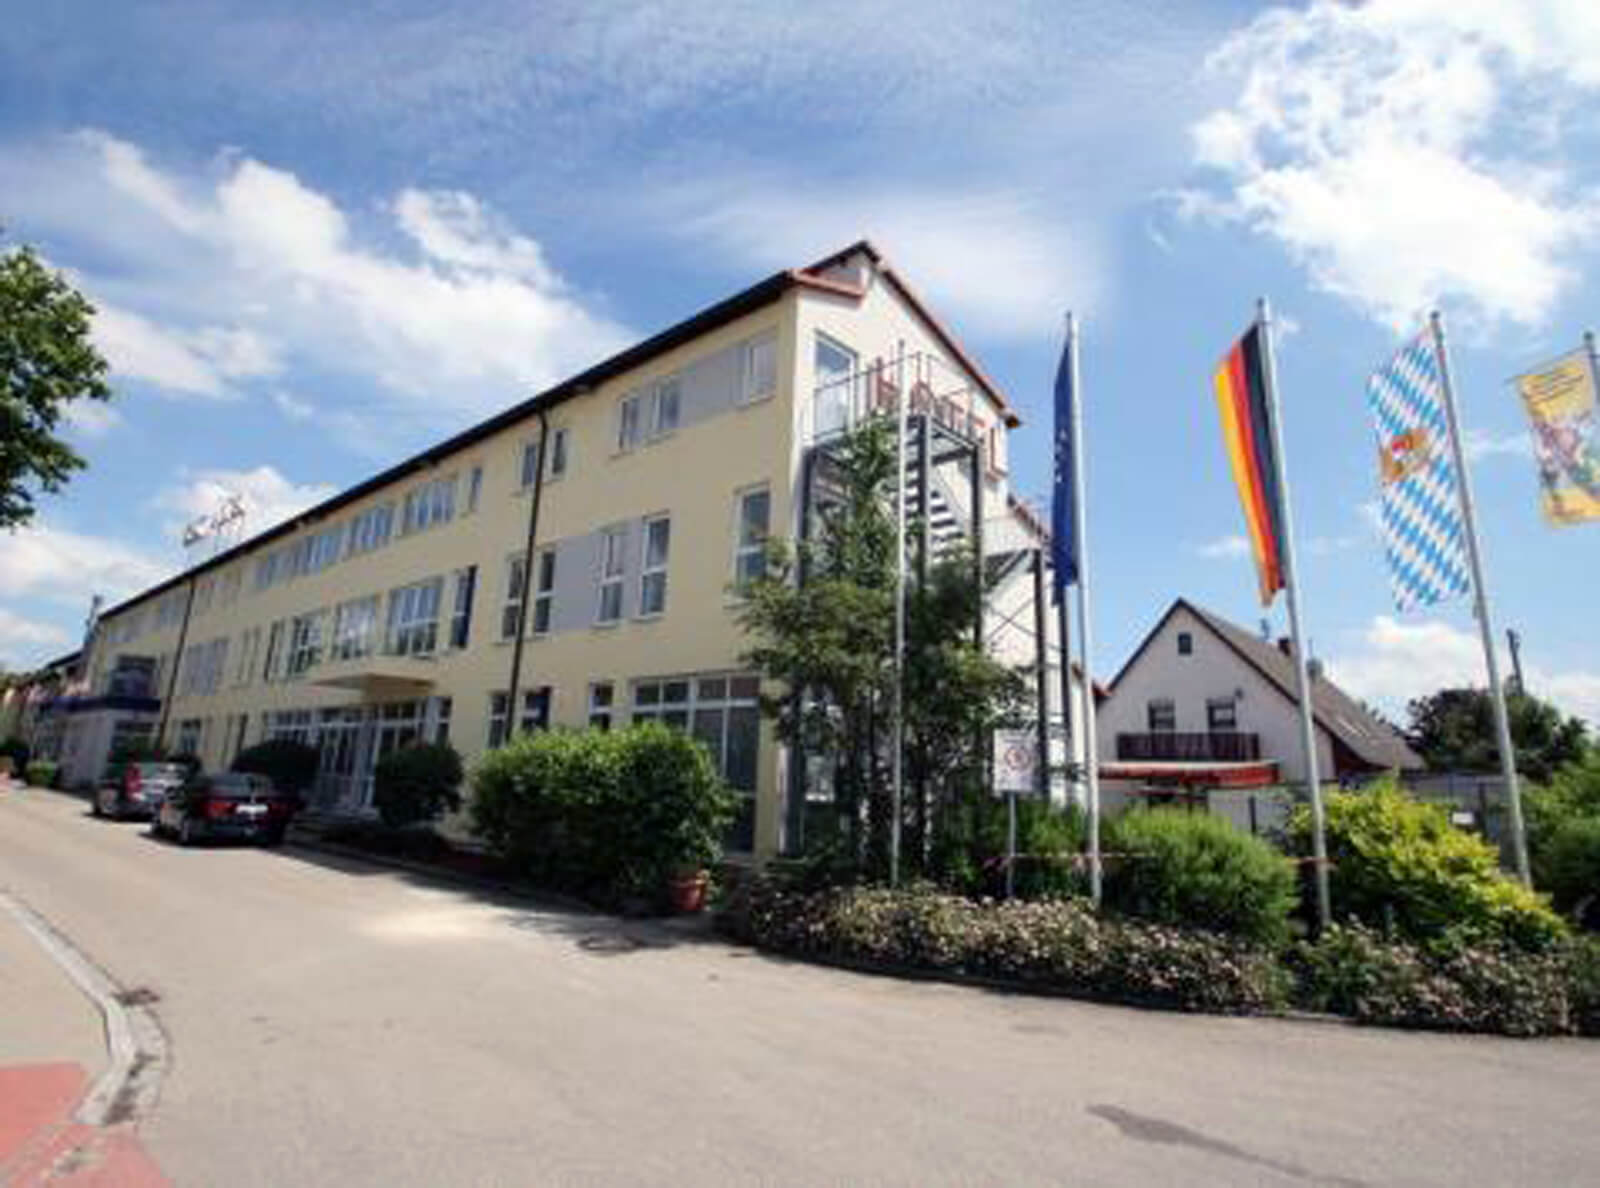 Villaggio turistico LEGOLAND® - Hotel partner - Taste Hotel Jettingen